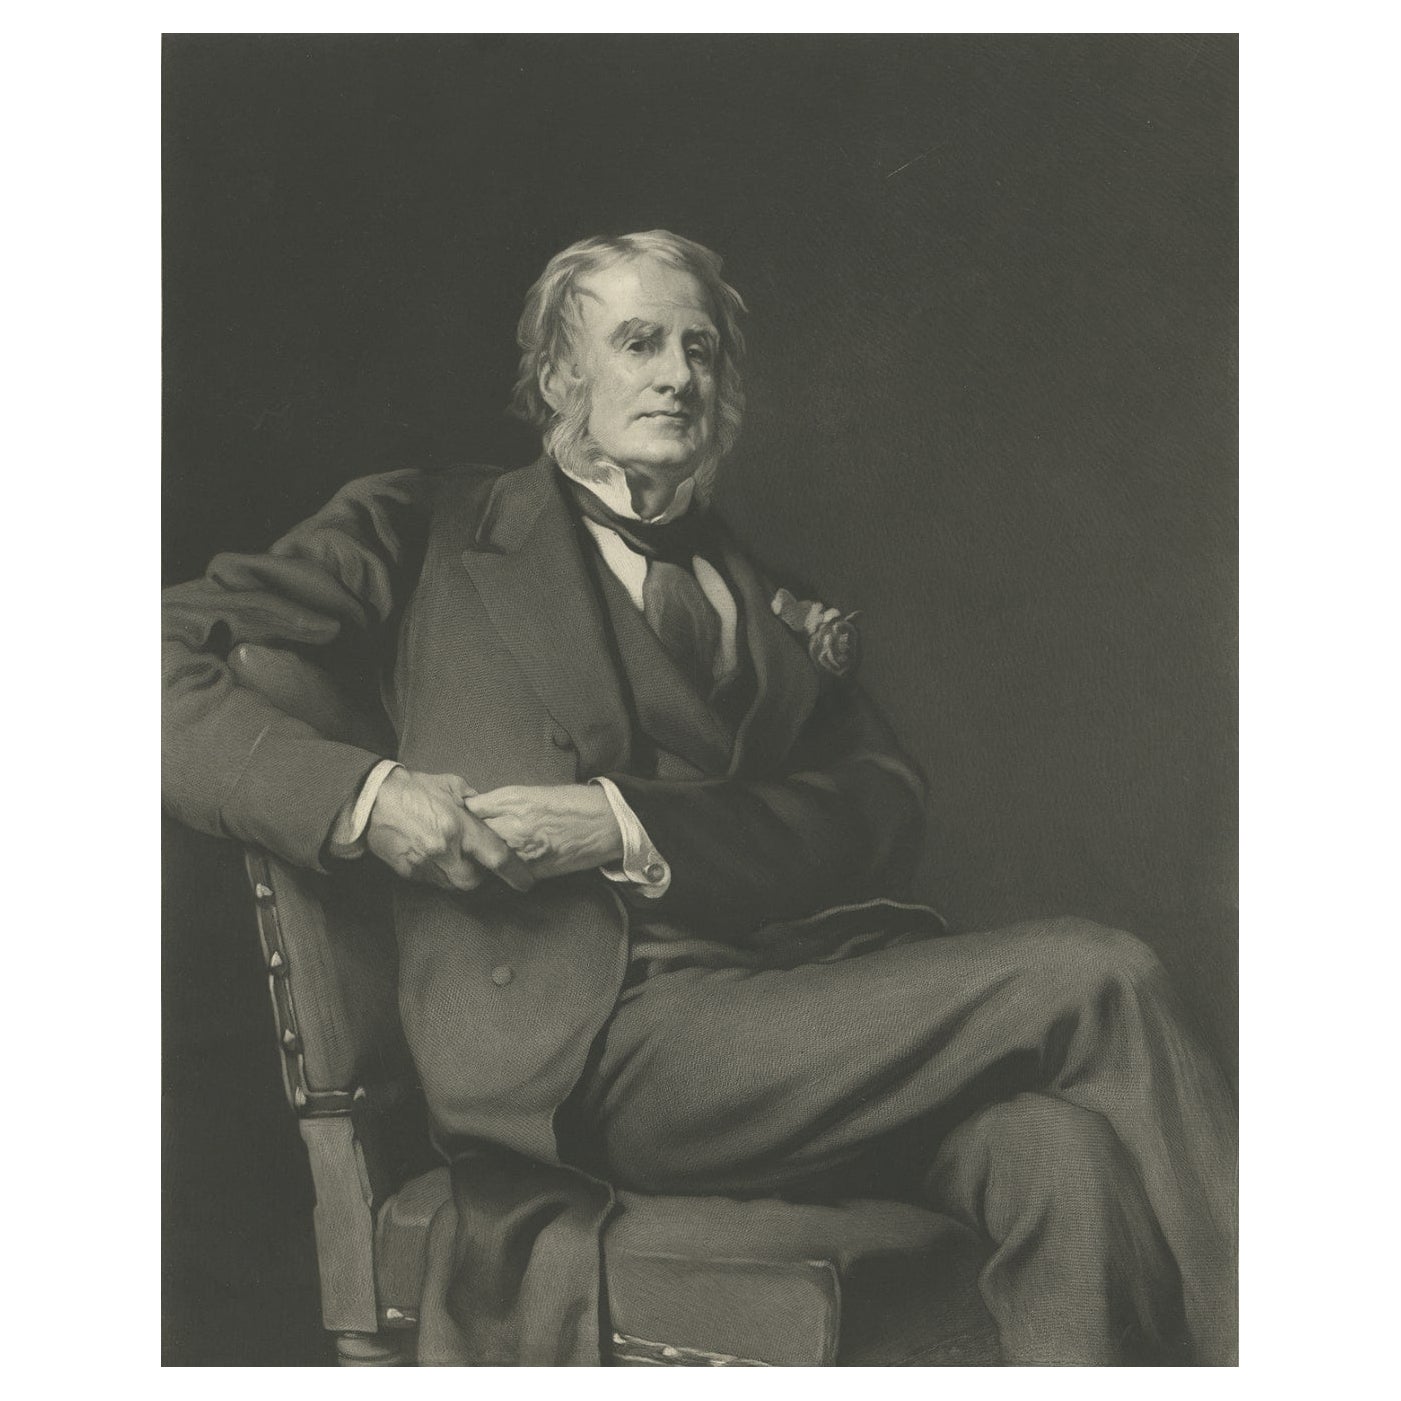 Antique Portrait of John Wilson-Patten by Graves, 1884